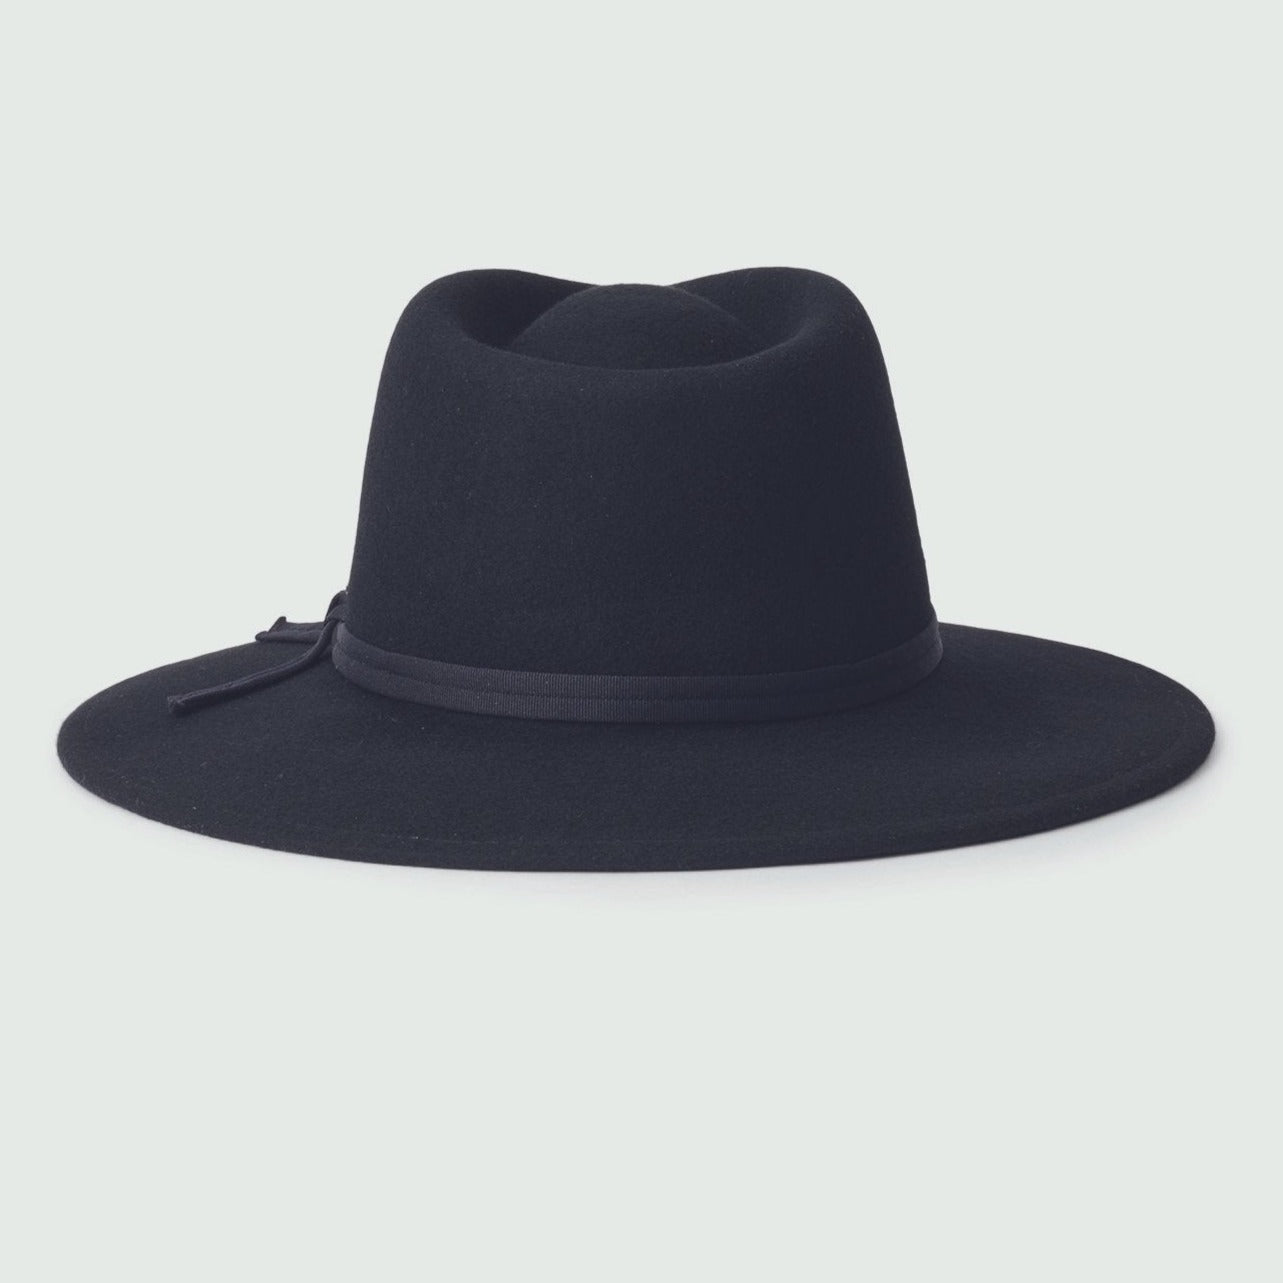 Joanna Felt Packable Hat - 100% Wool Felt - Black